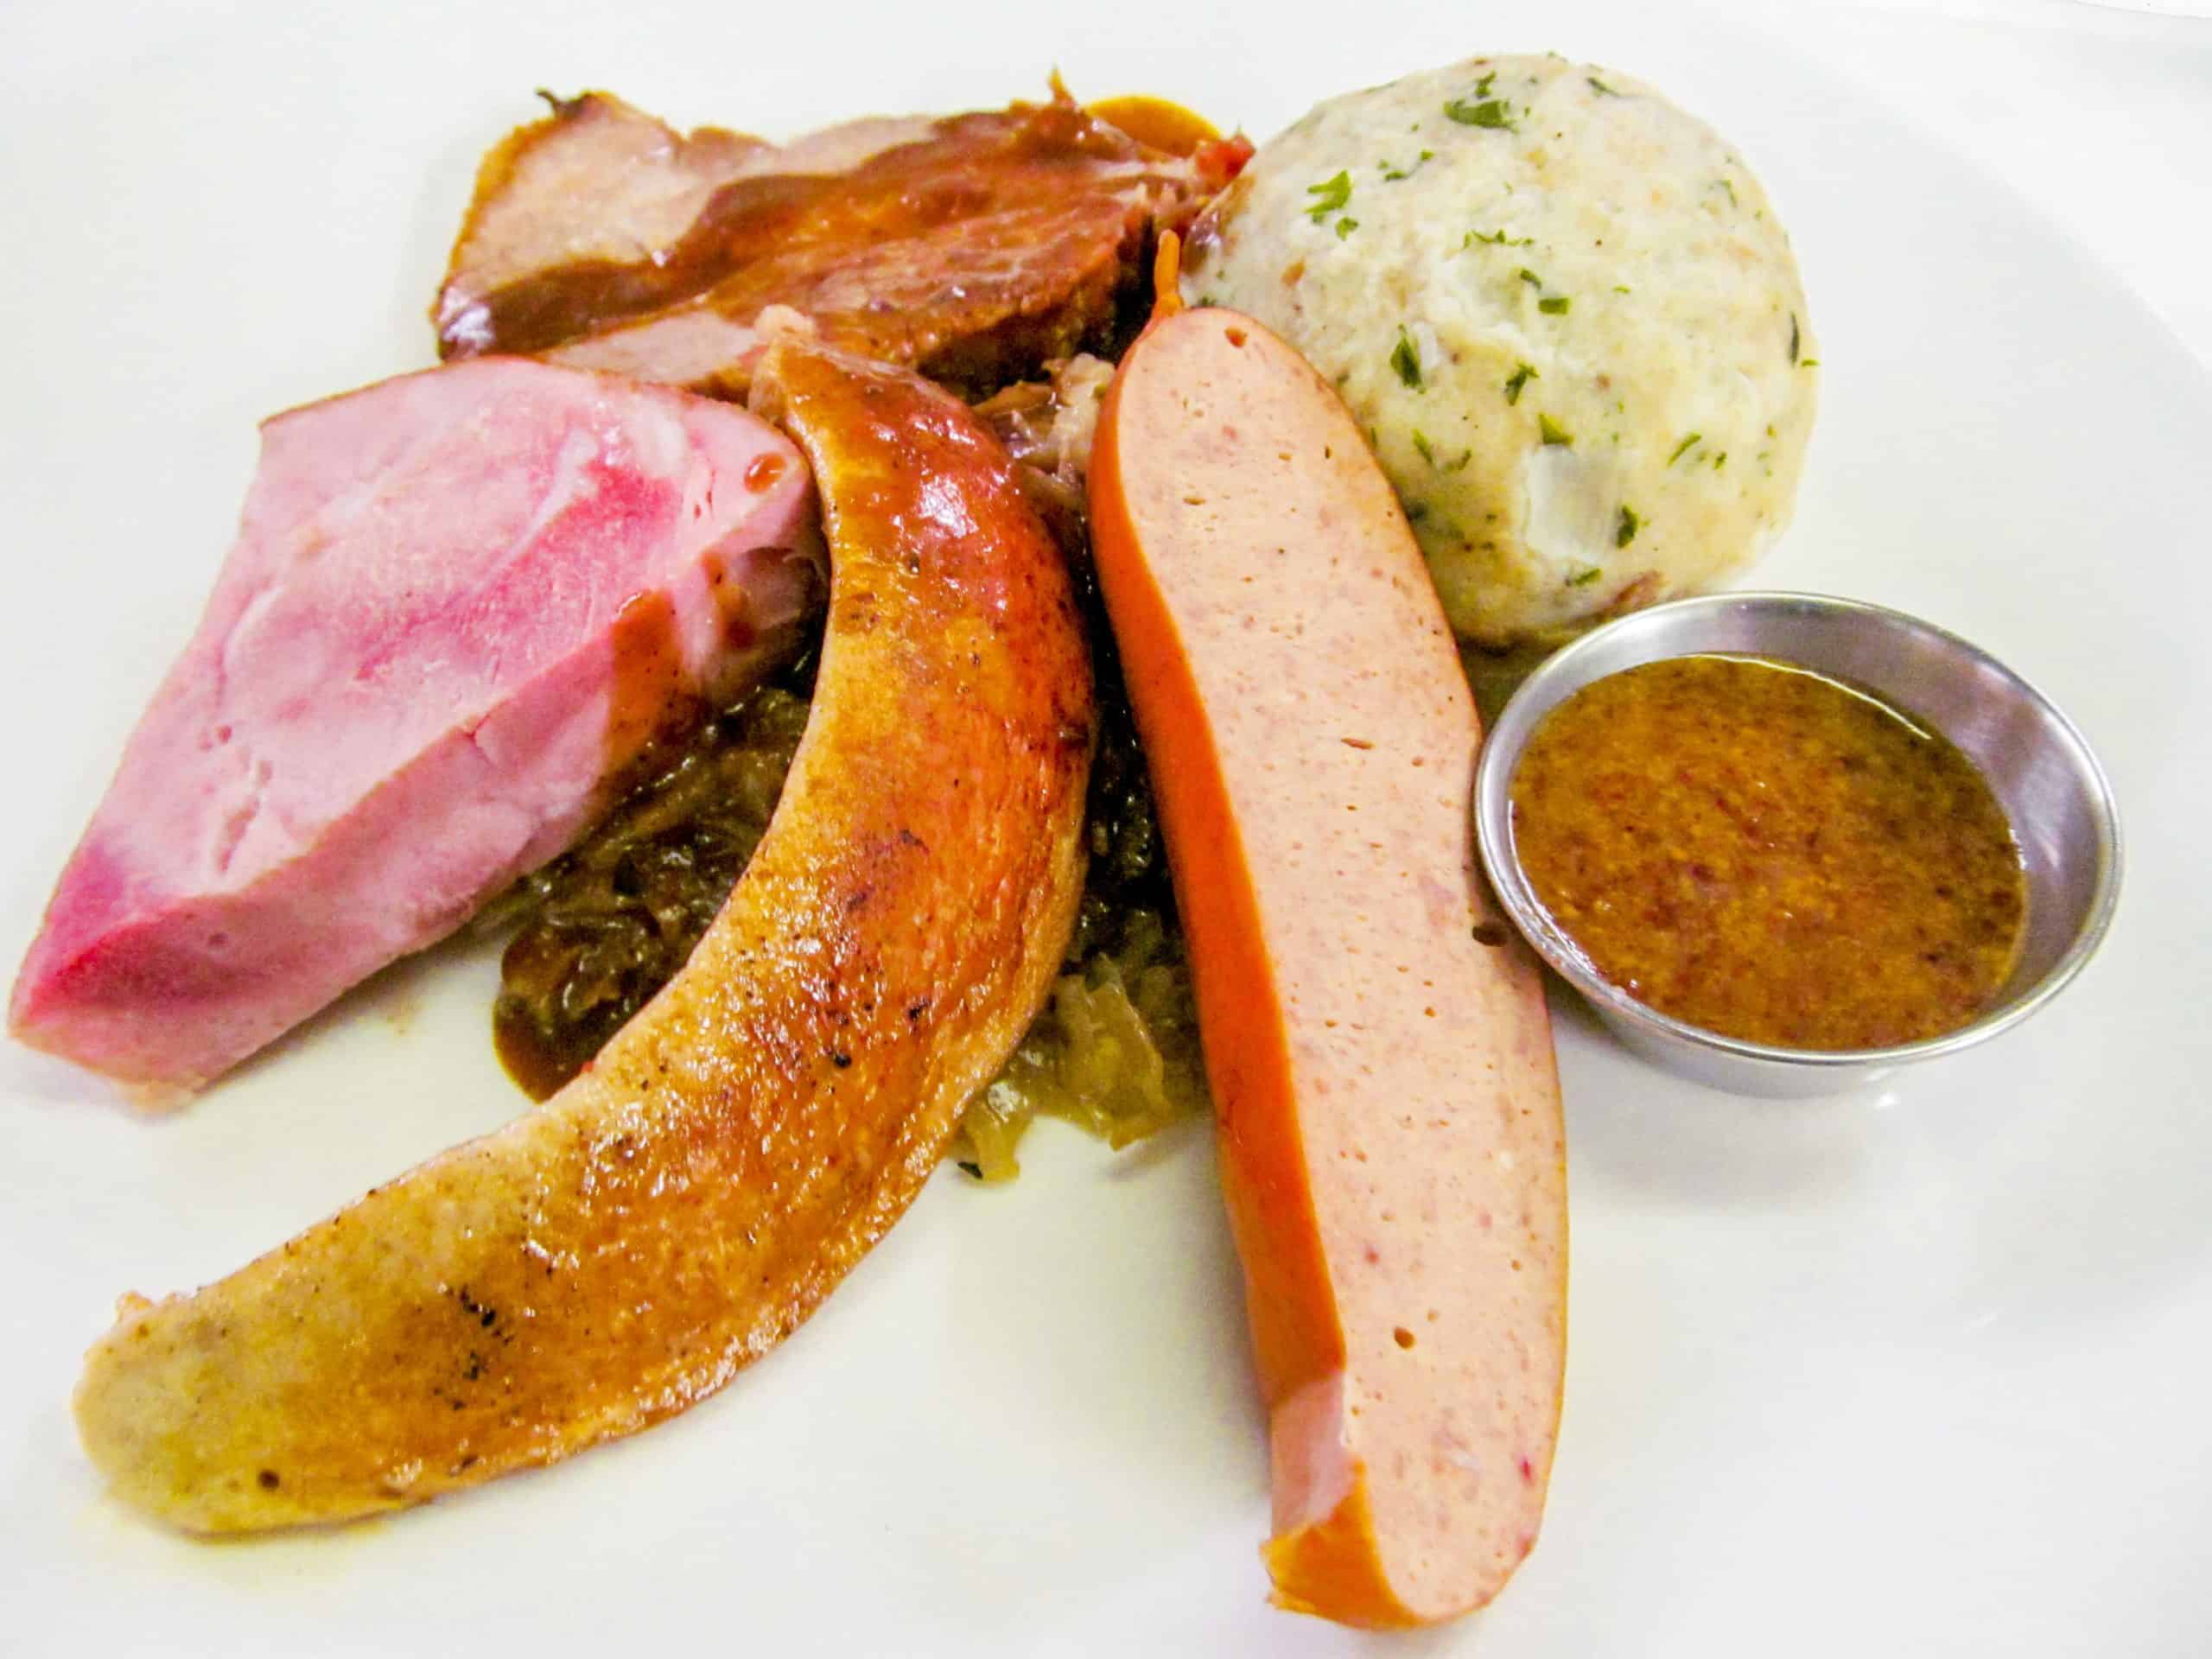 Platter of Oktoberfest foods like smoked ham, sausage, and liverwurst